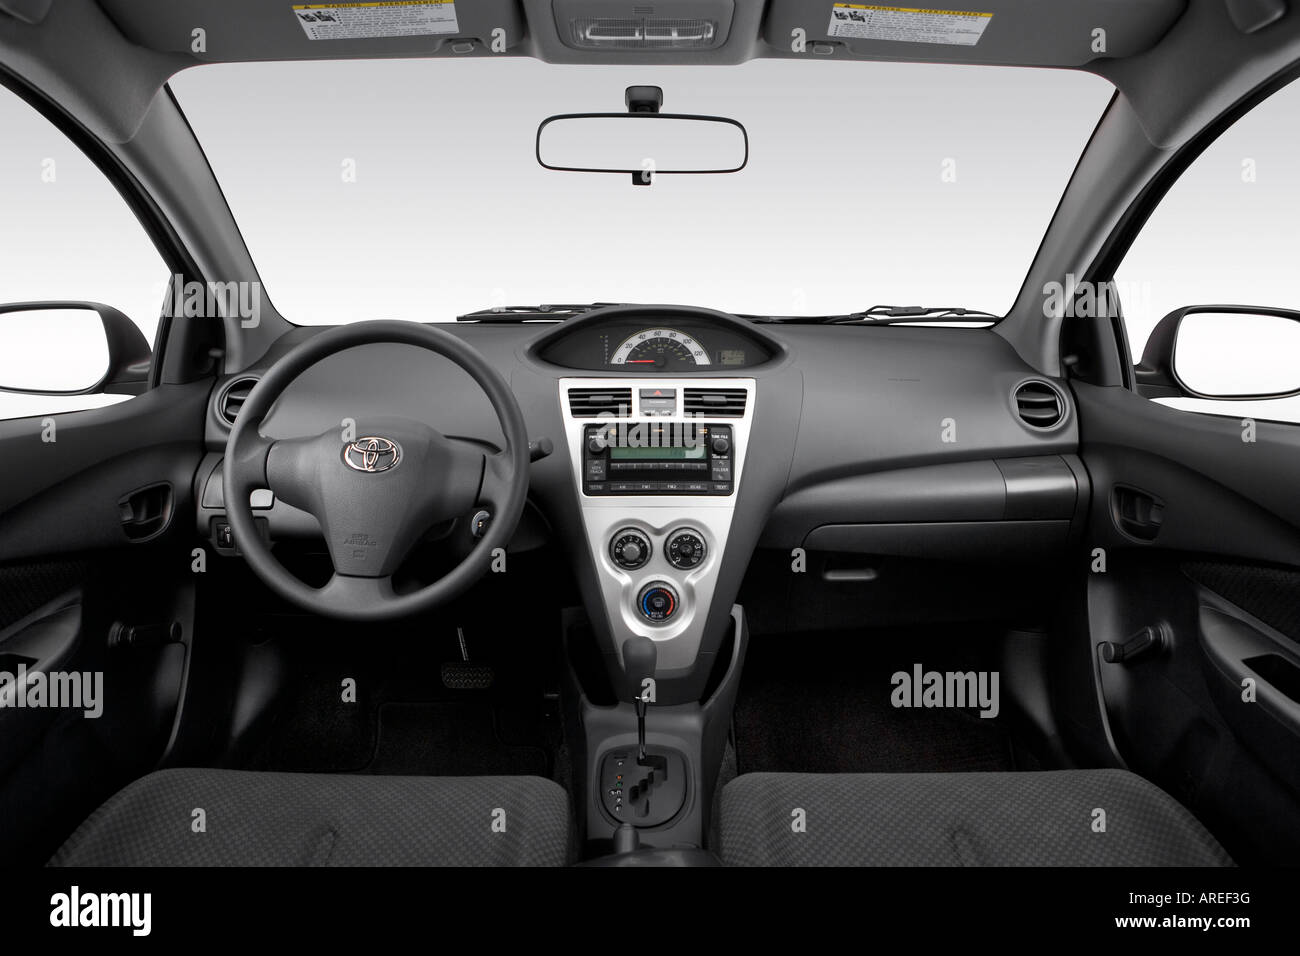 2007 Toyota Yaris in Black - Dashboard, center console, gear shifter view  Stock Photo - Alamy